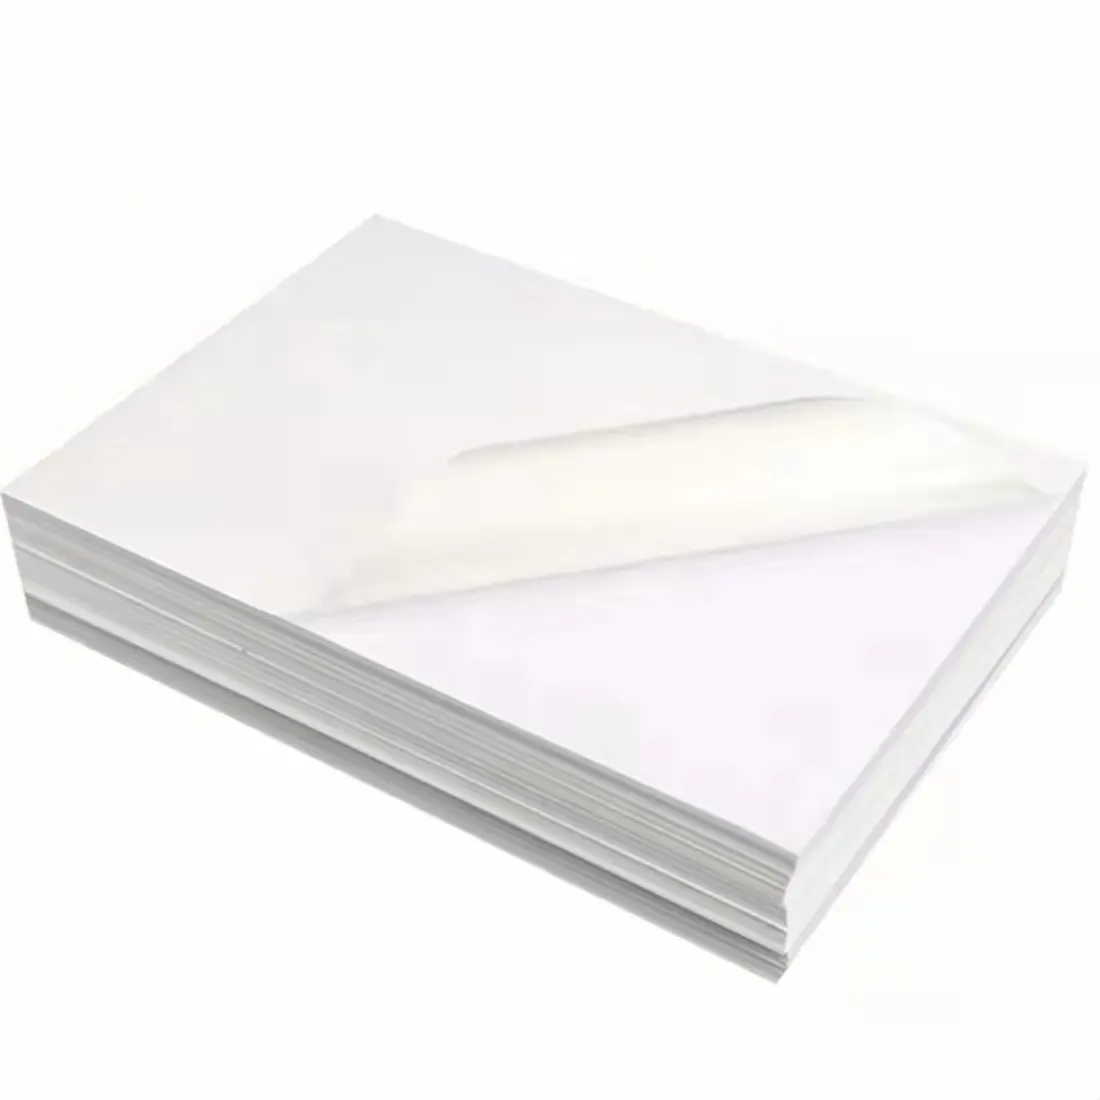 DIY Packaging Label Waterproof PP Paper Glossy Printable Vinyl Sticker Paper Self Adhesive Paper Roll For Inkjet Printer